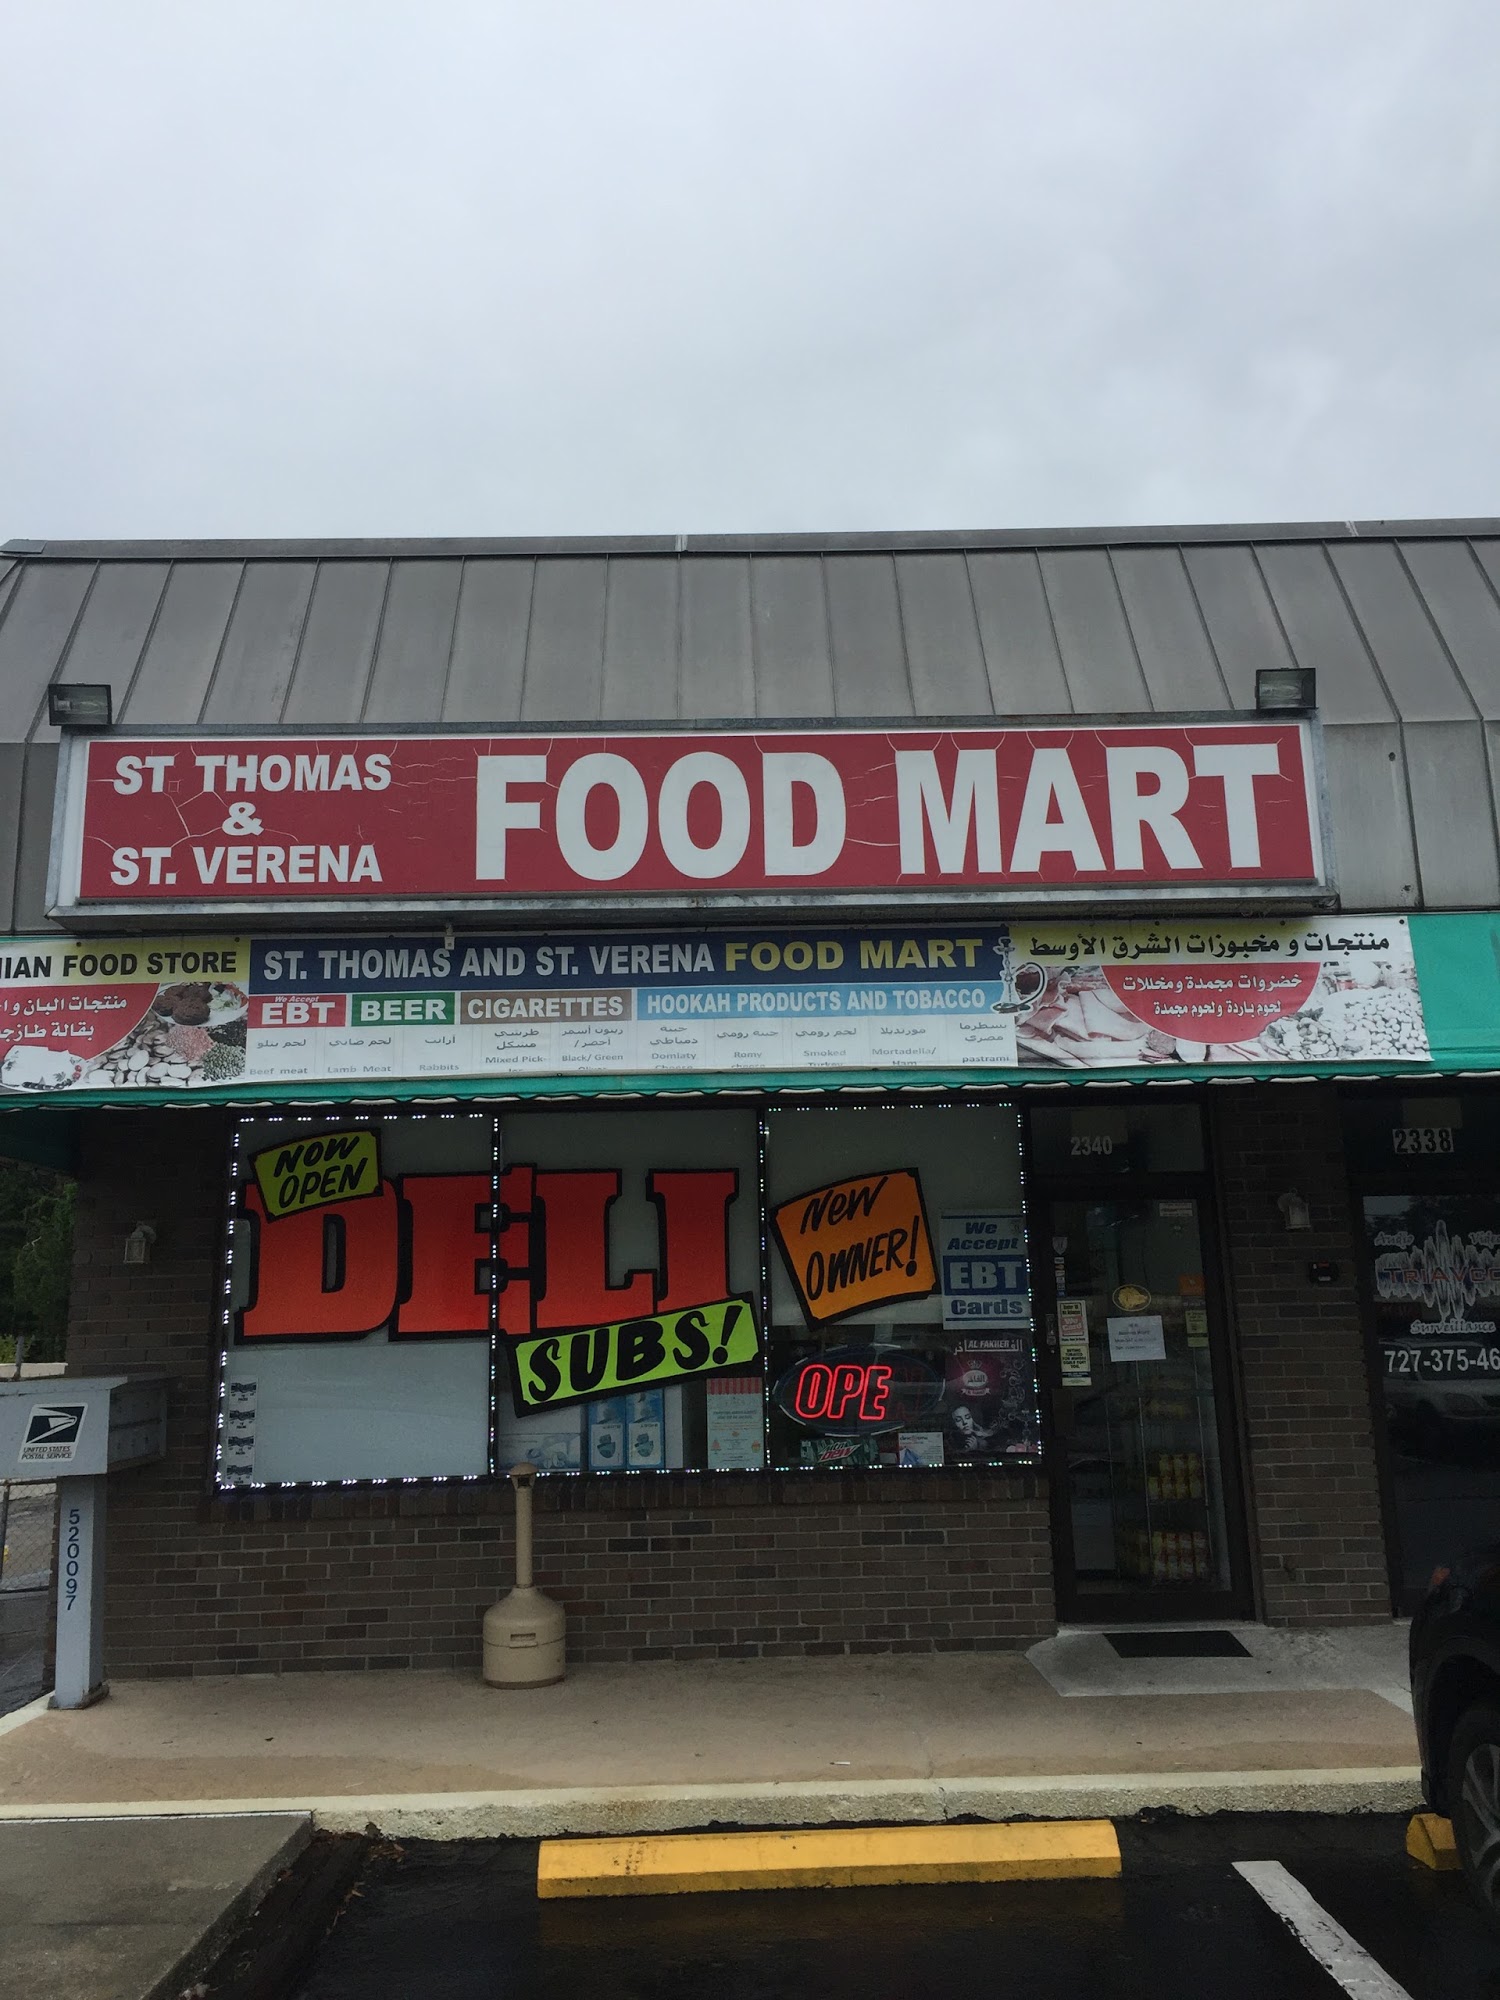 St Thomas and St Verena Food Mart